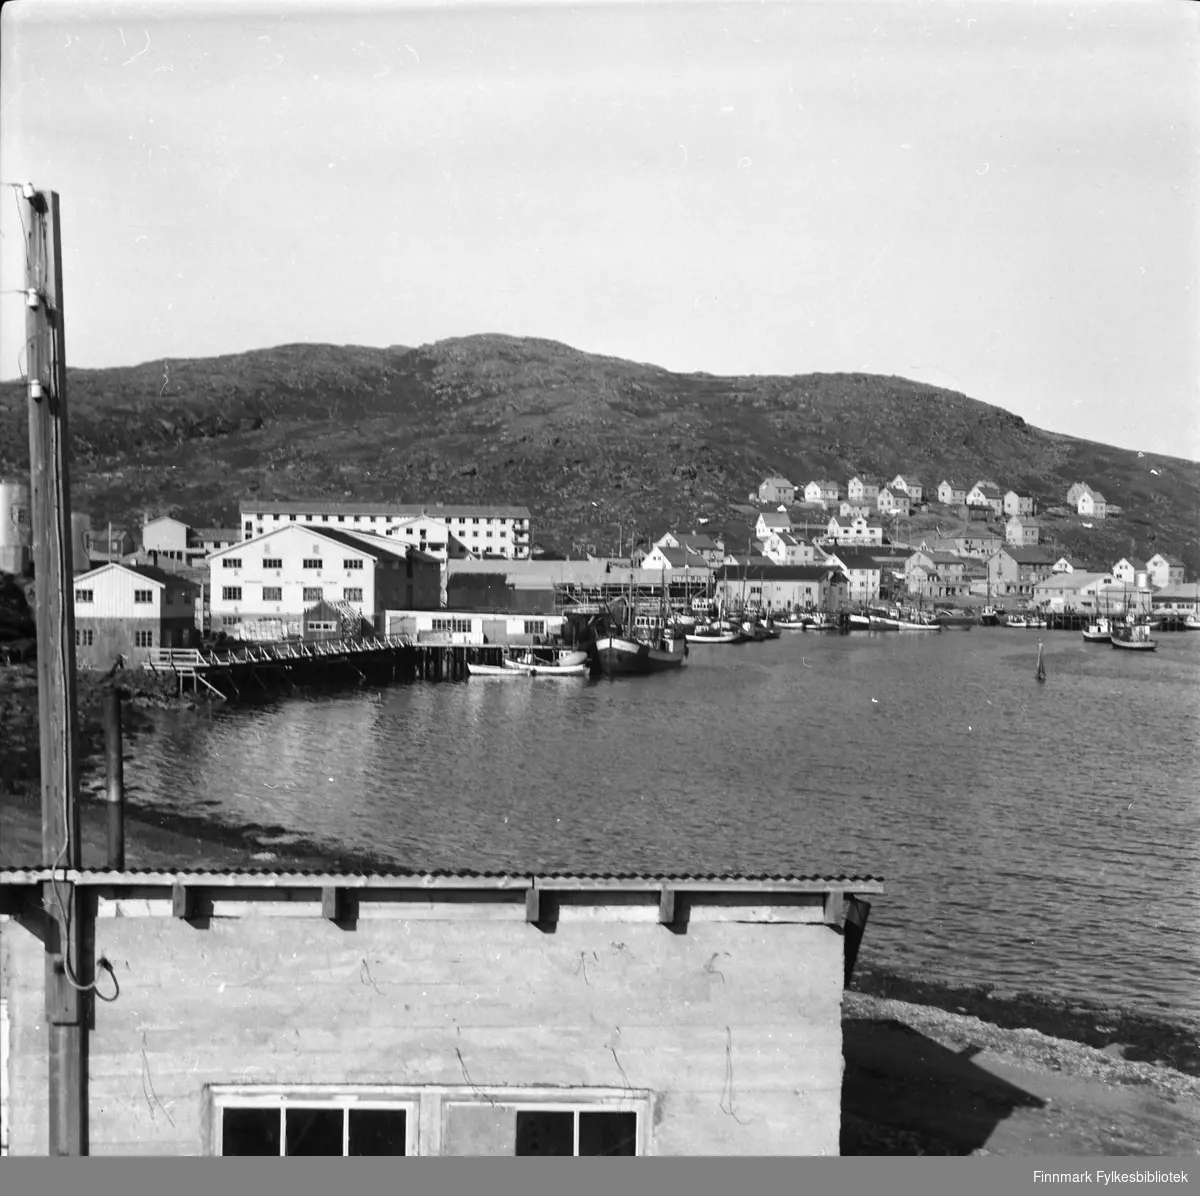 Havøysund ca. 1955. Vinsjhuset på Slippen i forgrunnen. Indre fiskarlagskai.